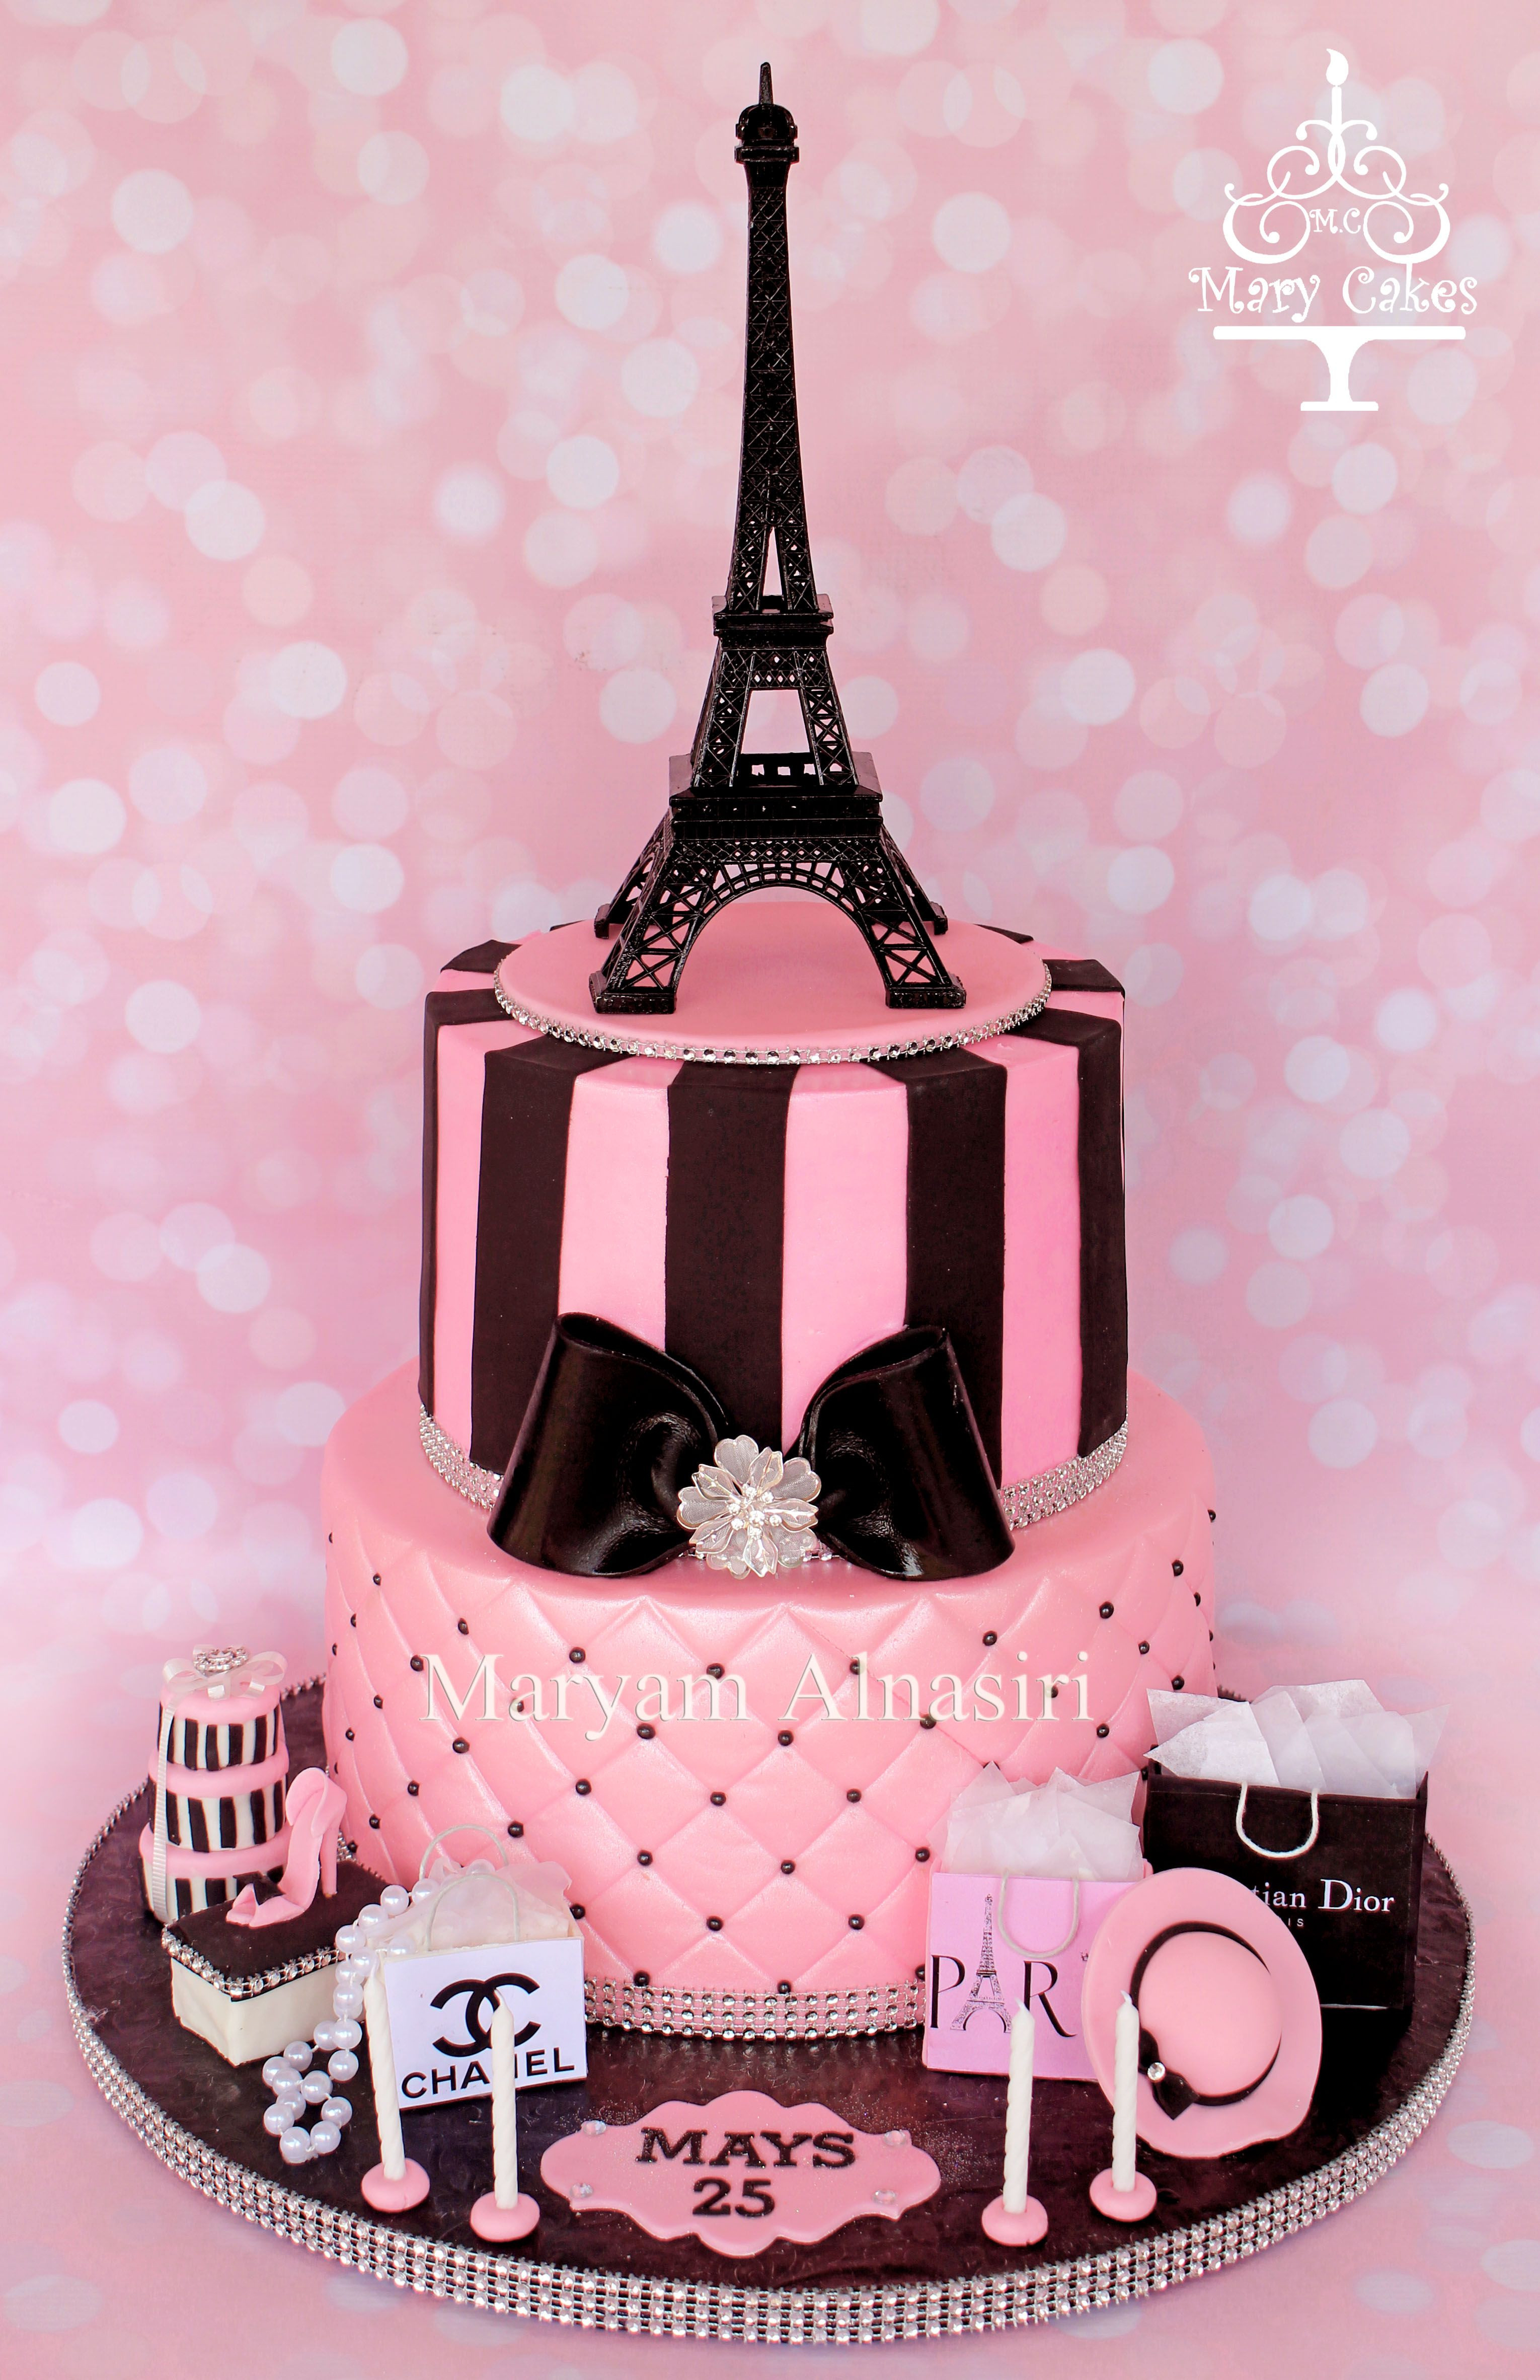 Best ideas about Paris Themed Birthday Cake
. Save or Pin Parisian theme cake pariscake eiffeltower pinkandblack Now.